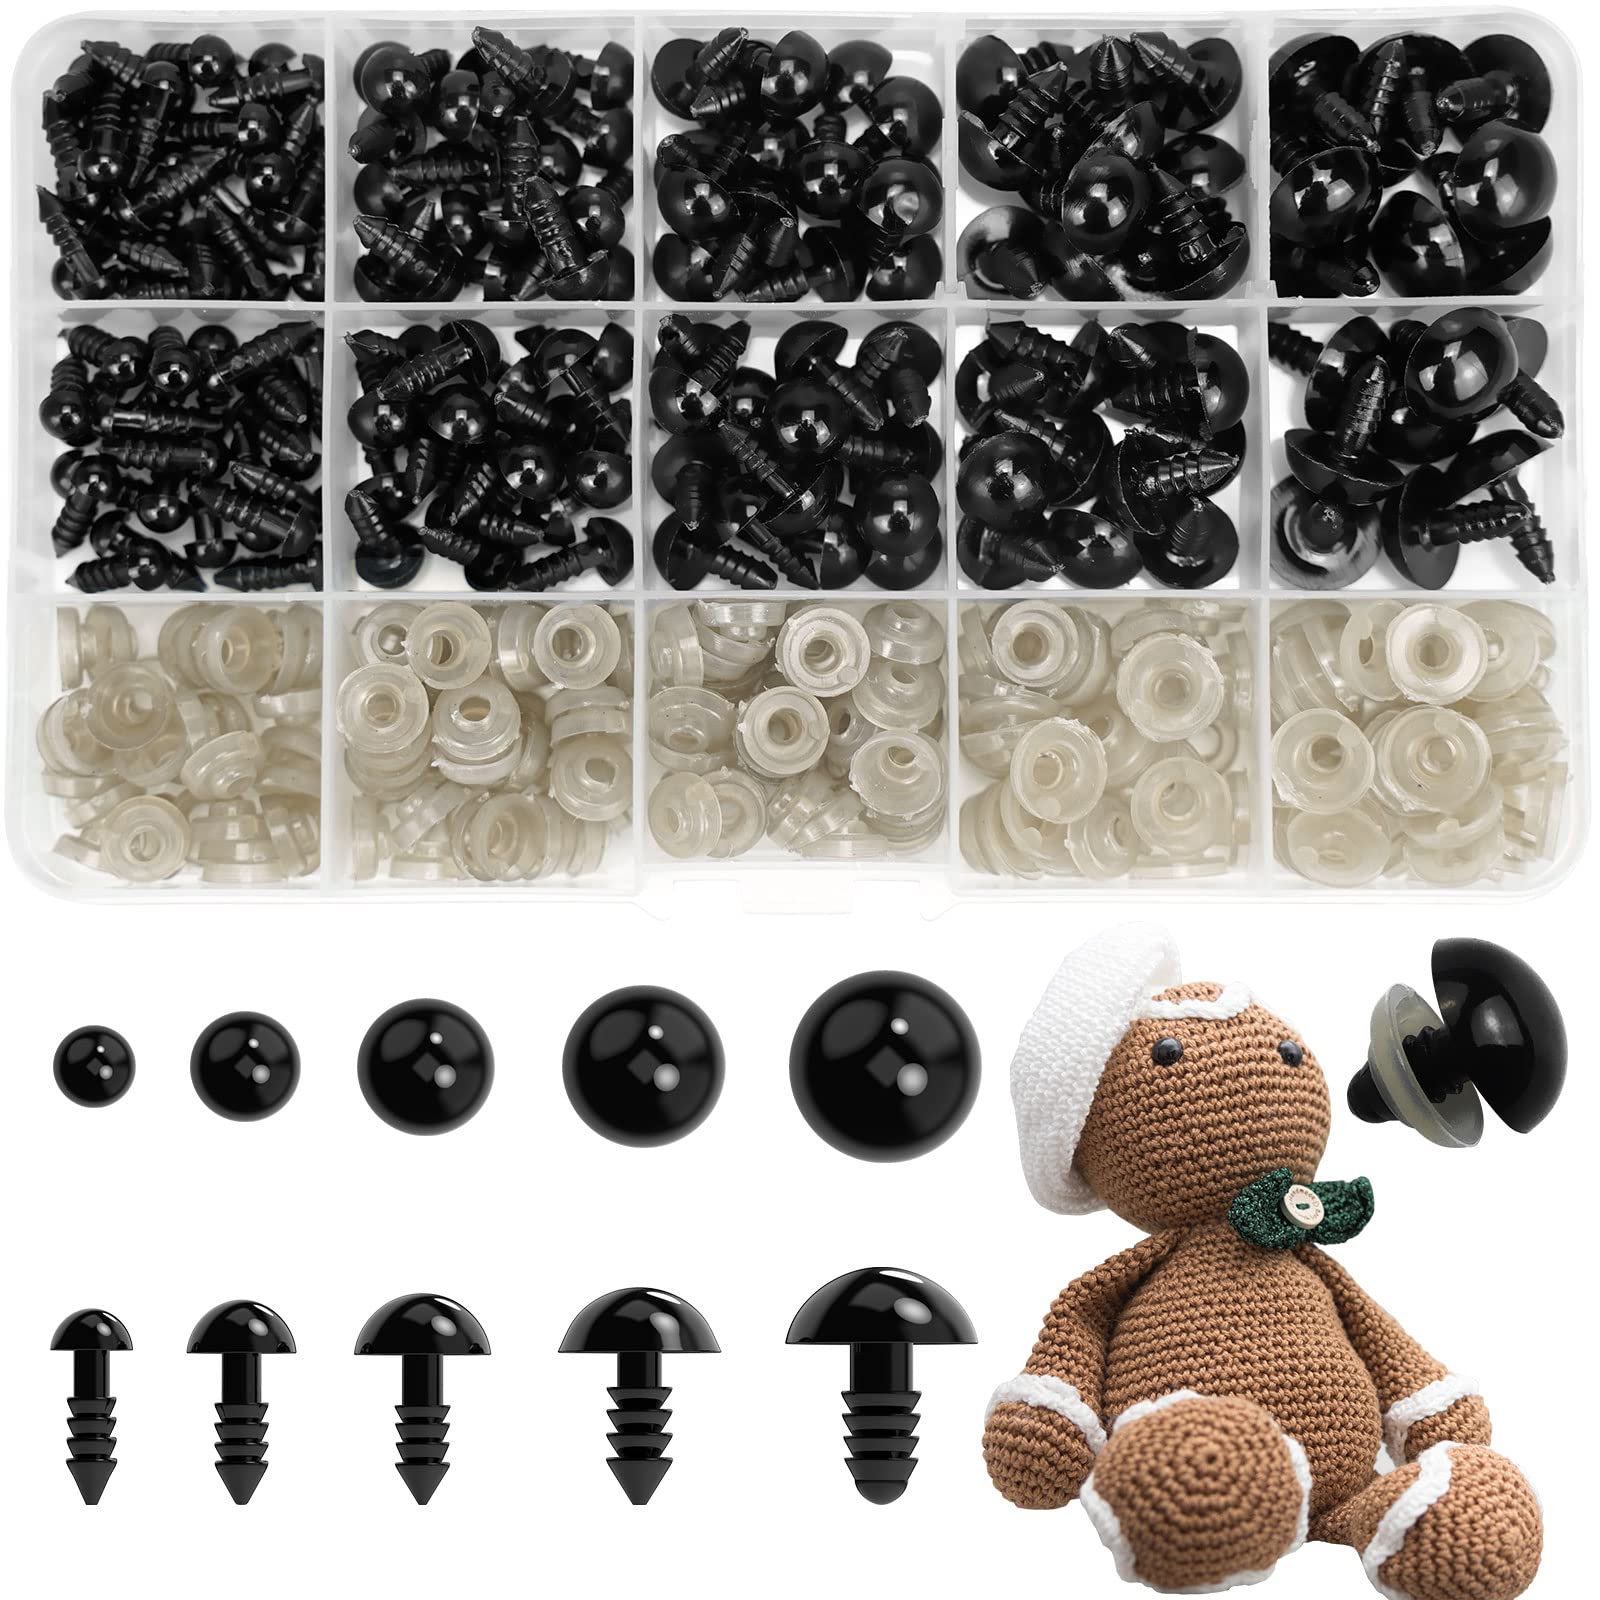 15mm Dark Brown Iris Black Pupil Round Safety Eyes and Washers: 2 Pairs -  Doll / Amigurumi / Animal / Stuffed Creation / PaintFree / Crochet